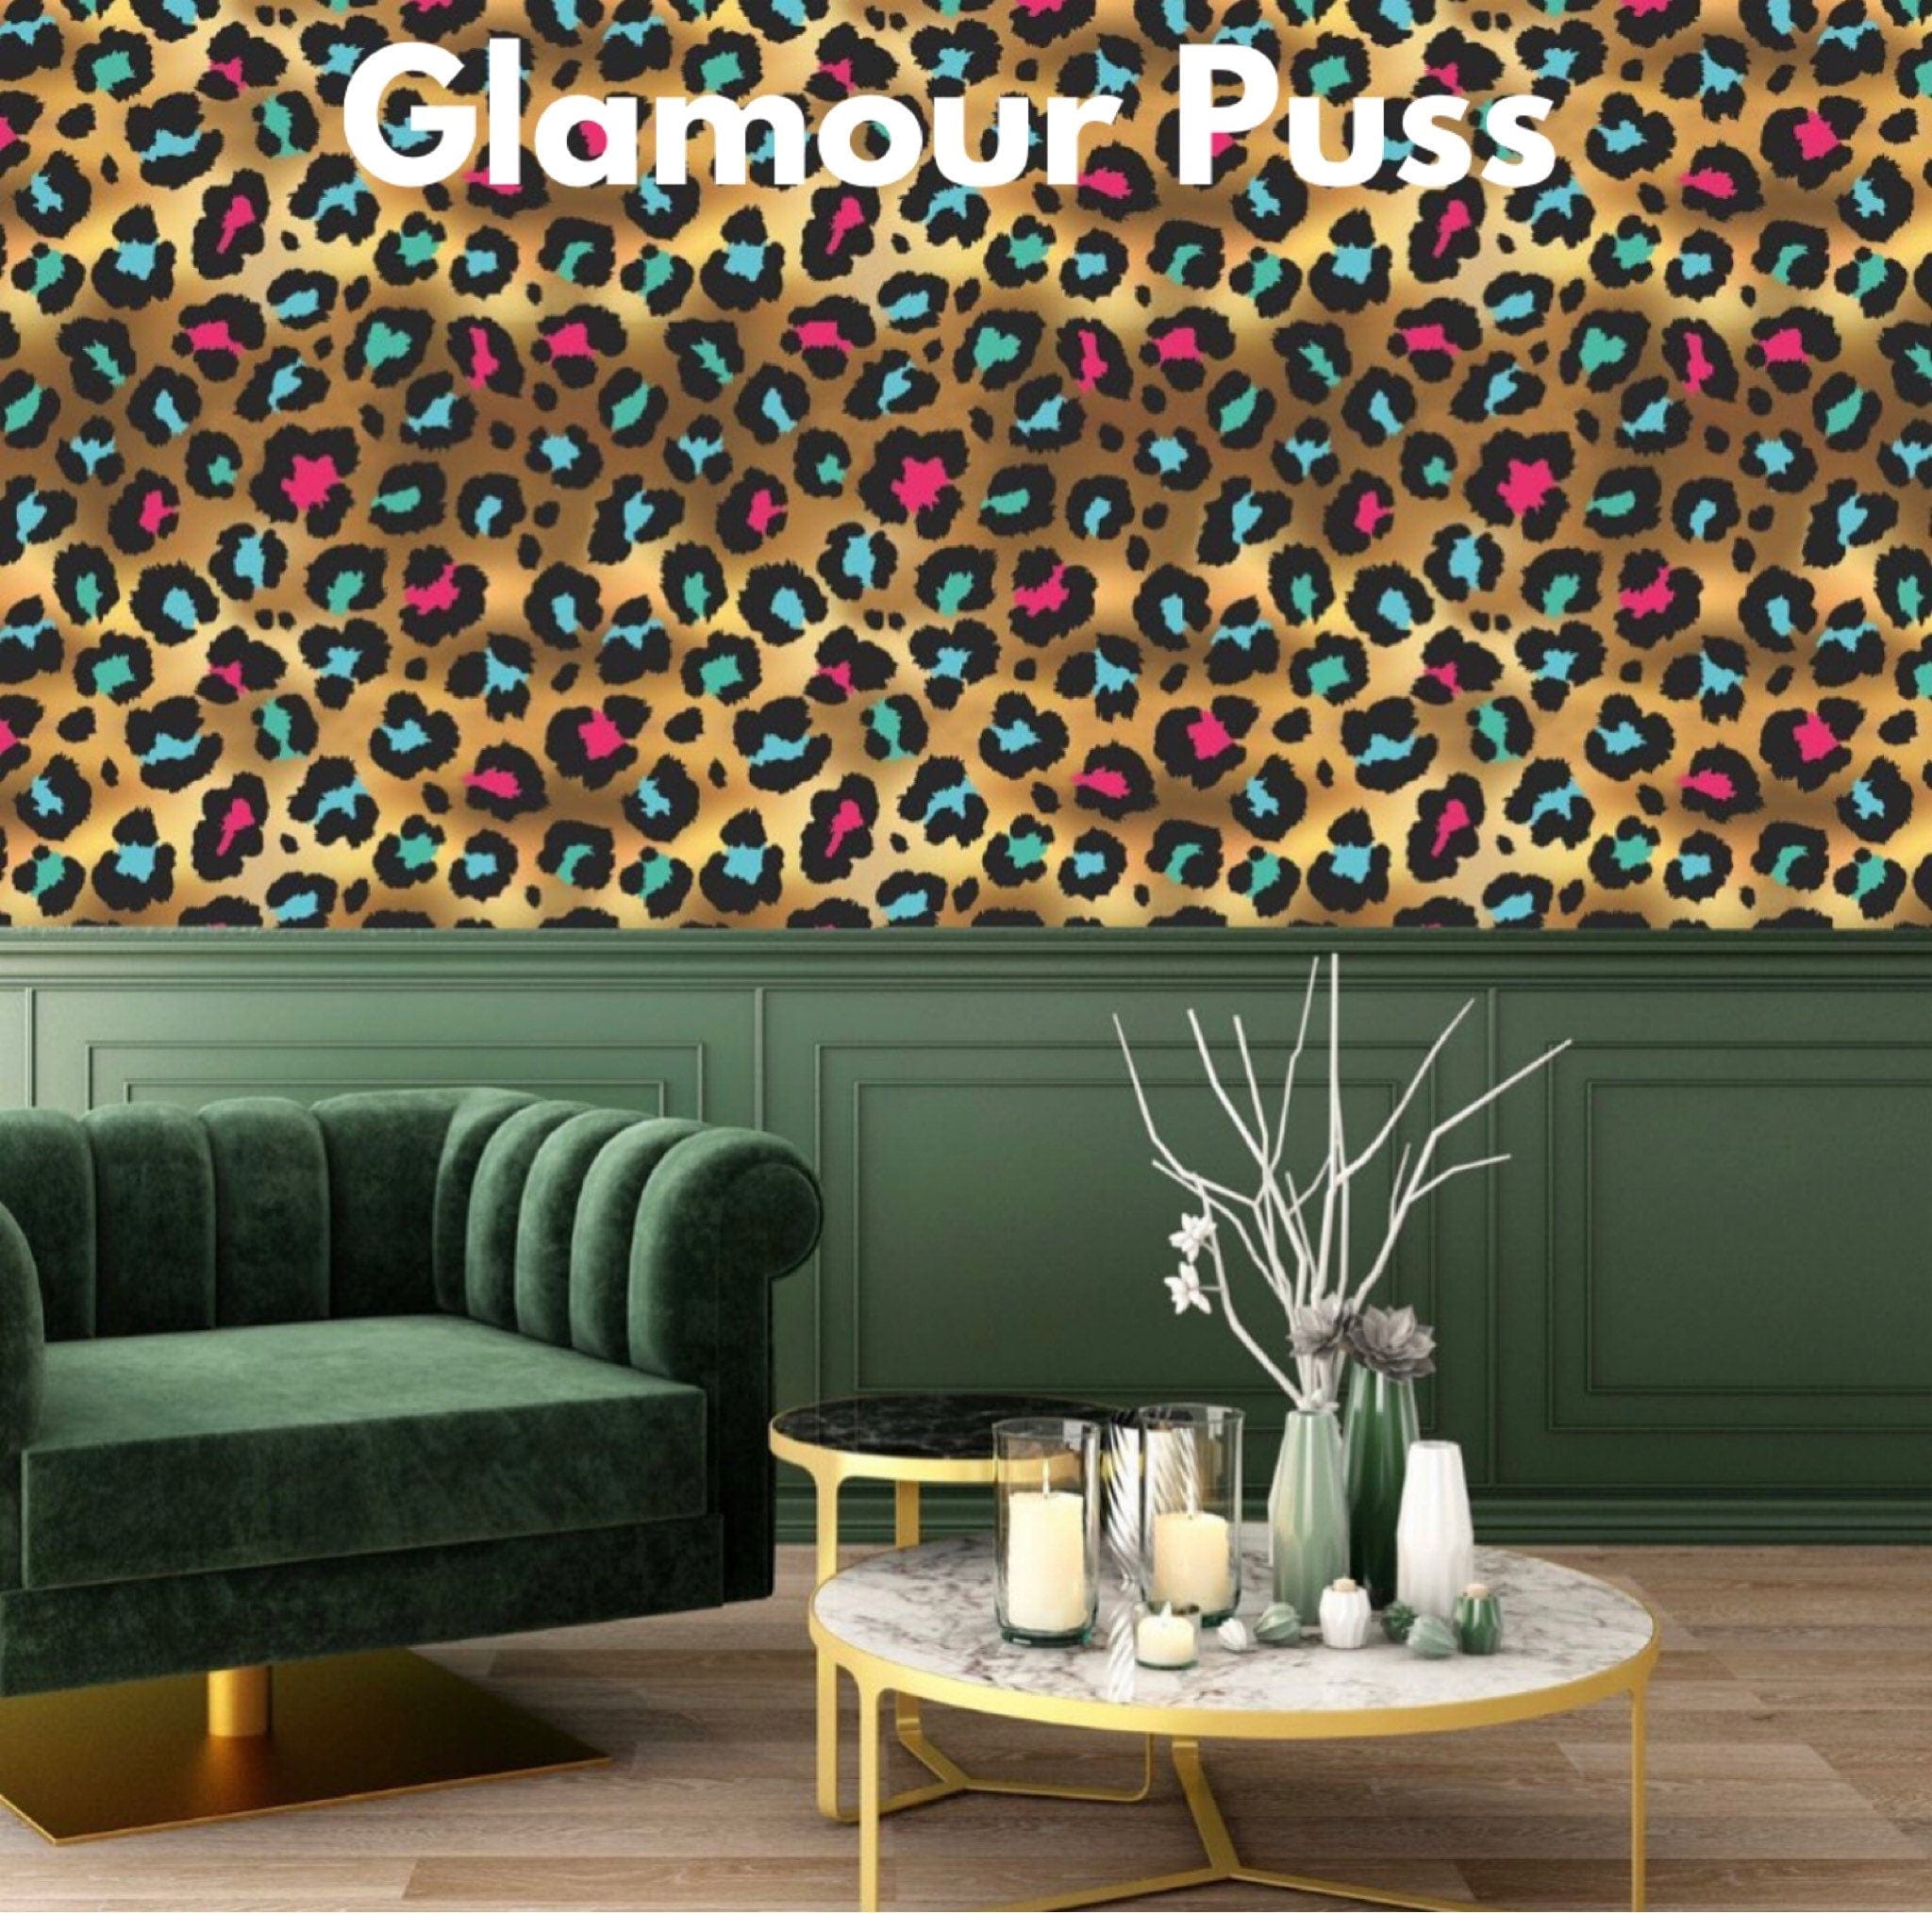 Leopard Animal Print Wallpaper in Blush Pink – I Love Wallpaper